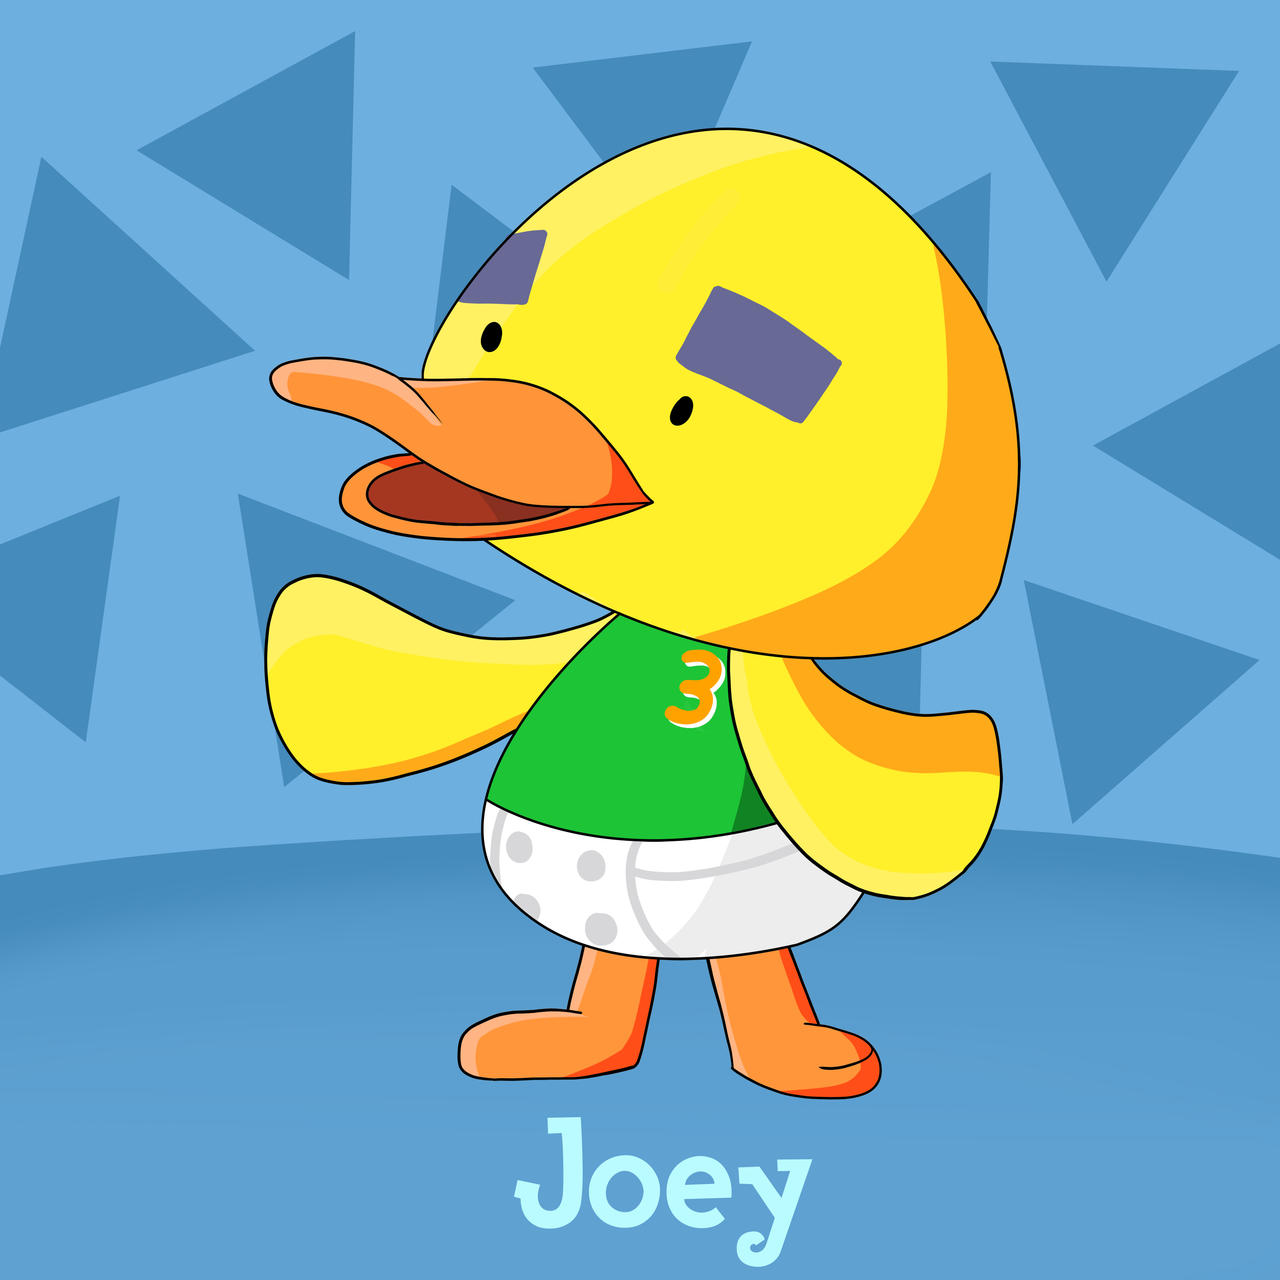 Joey - Animal Crossing by Macaro049 on DeviantArt